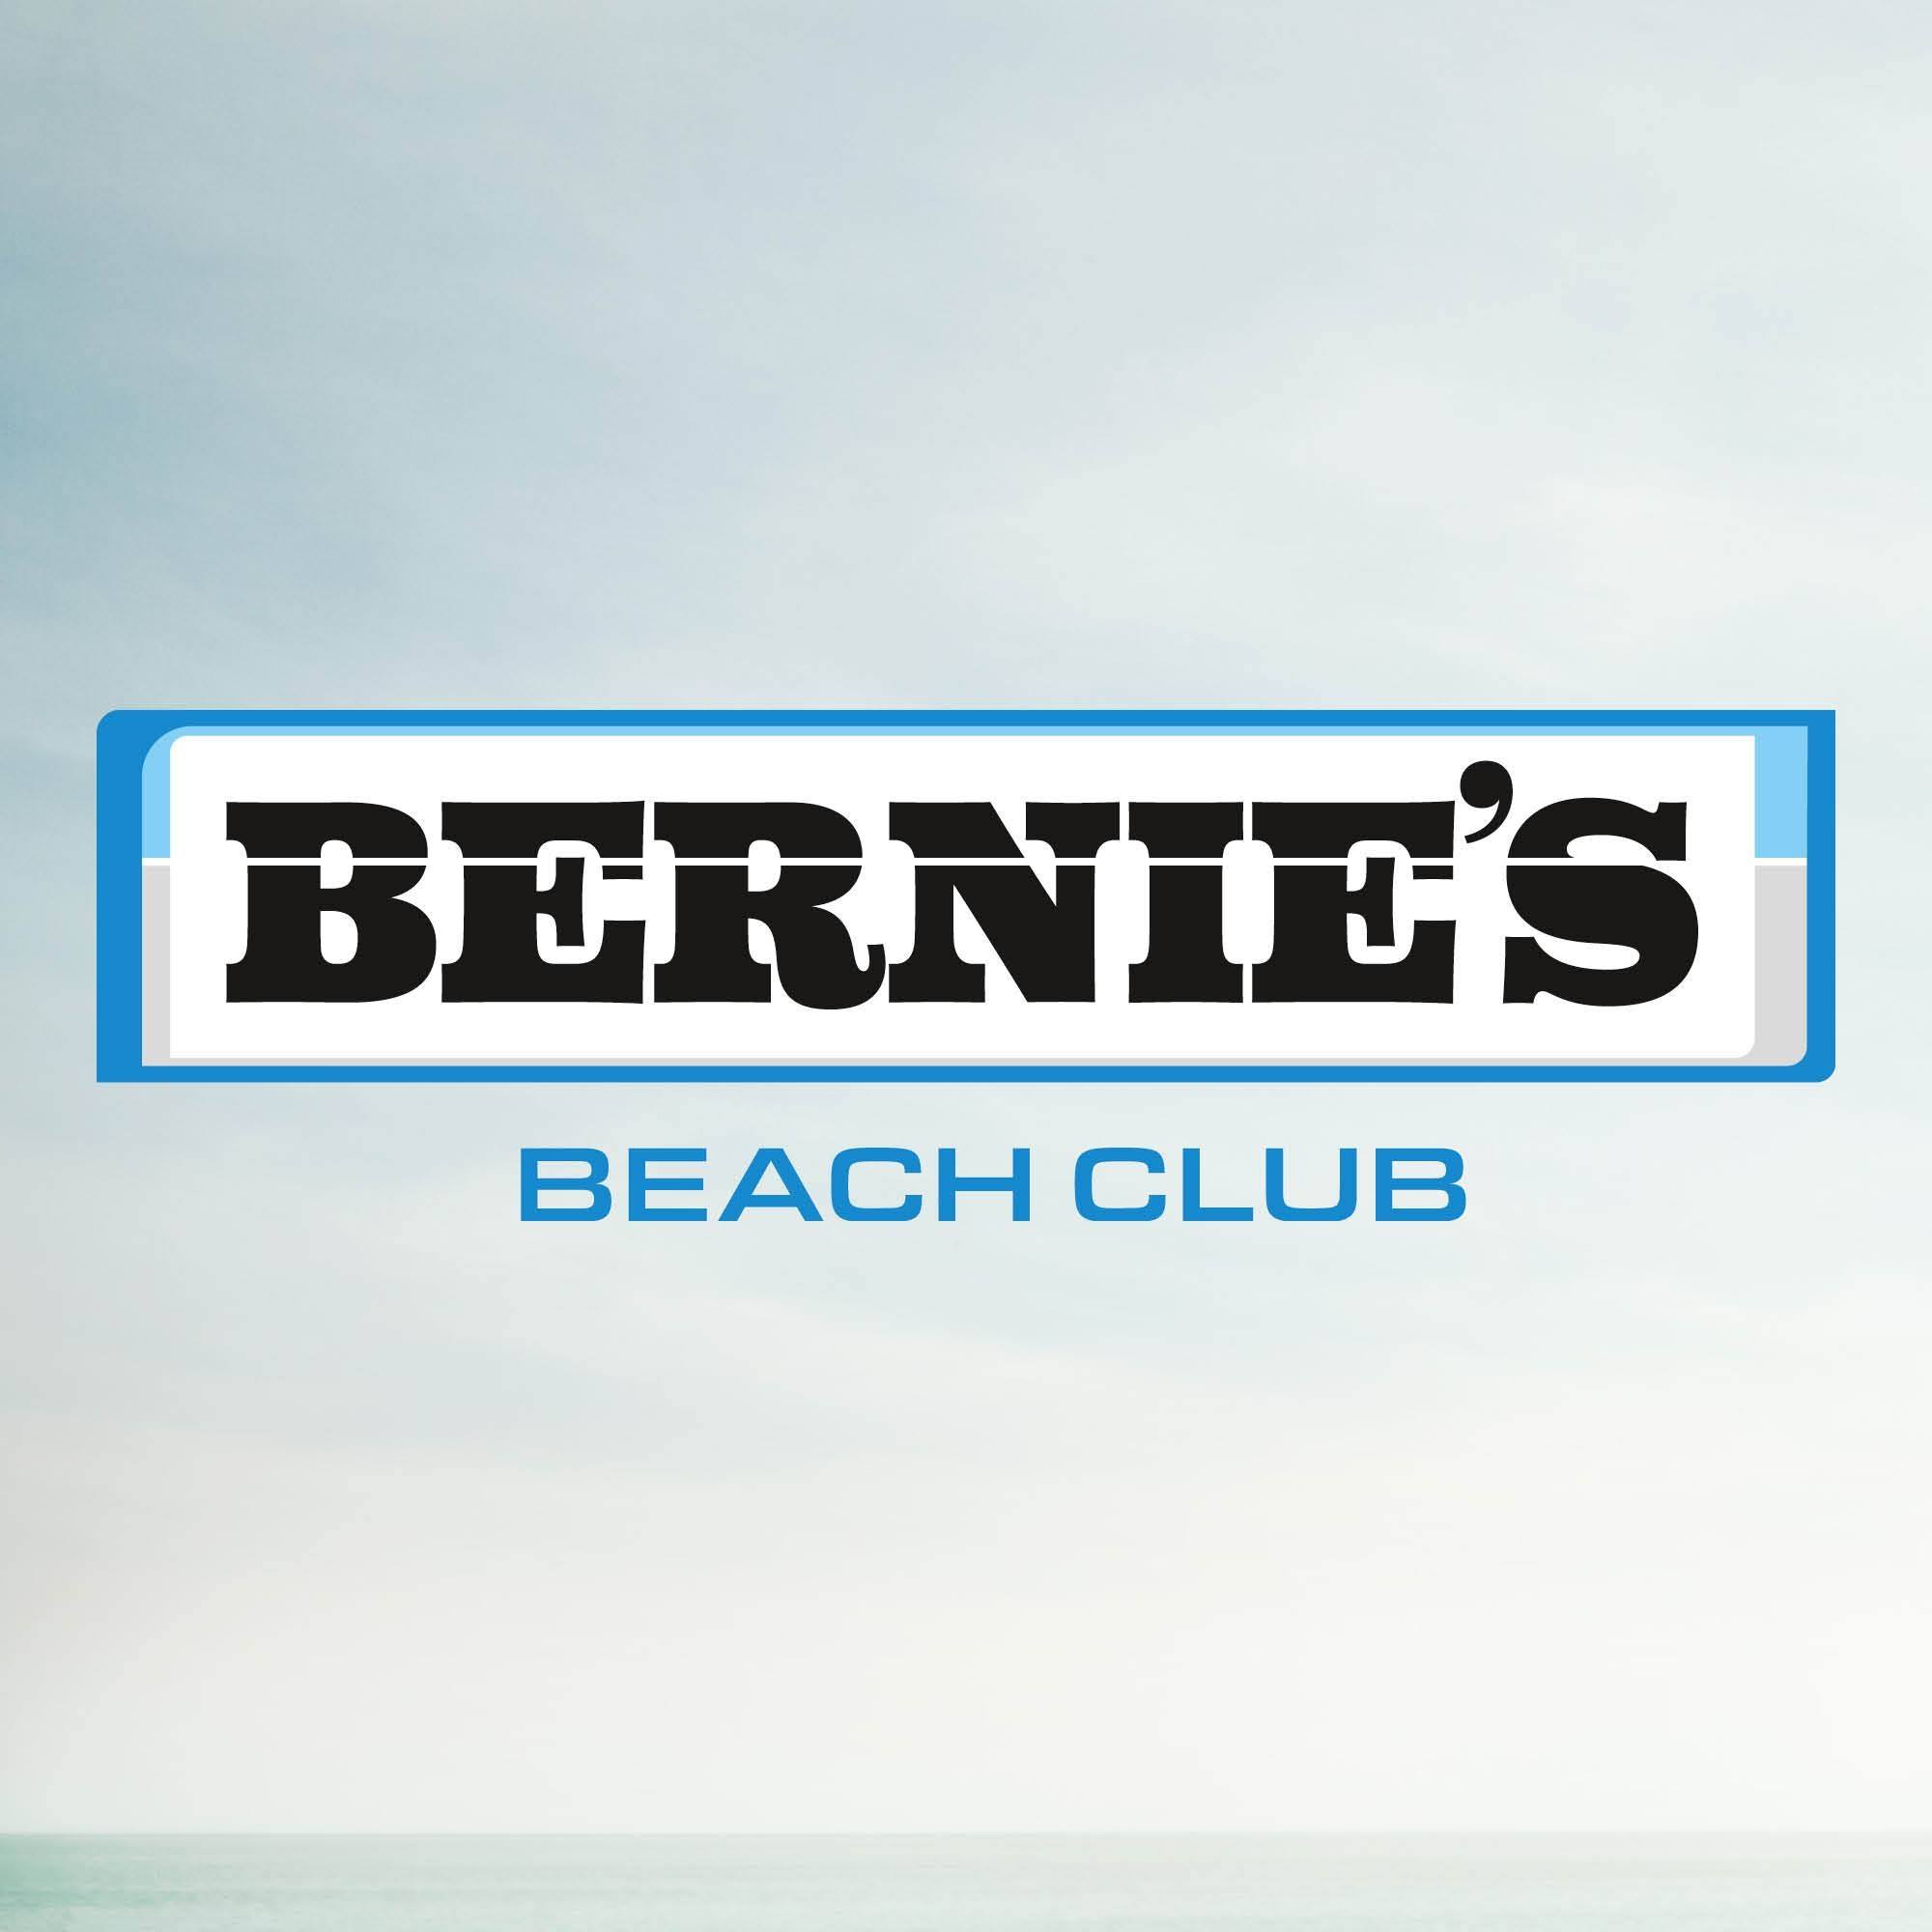 Bernie's Beach Club,Netherlands